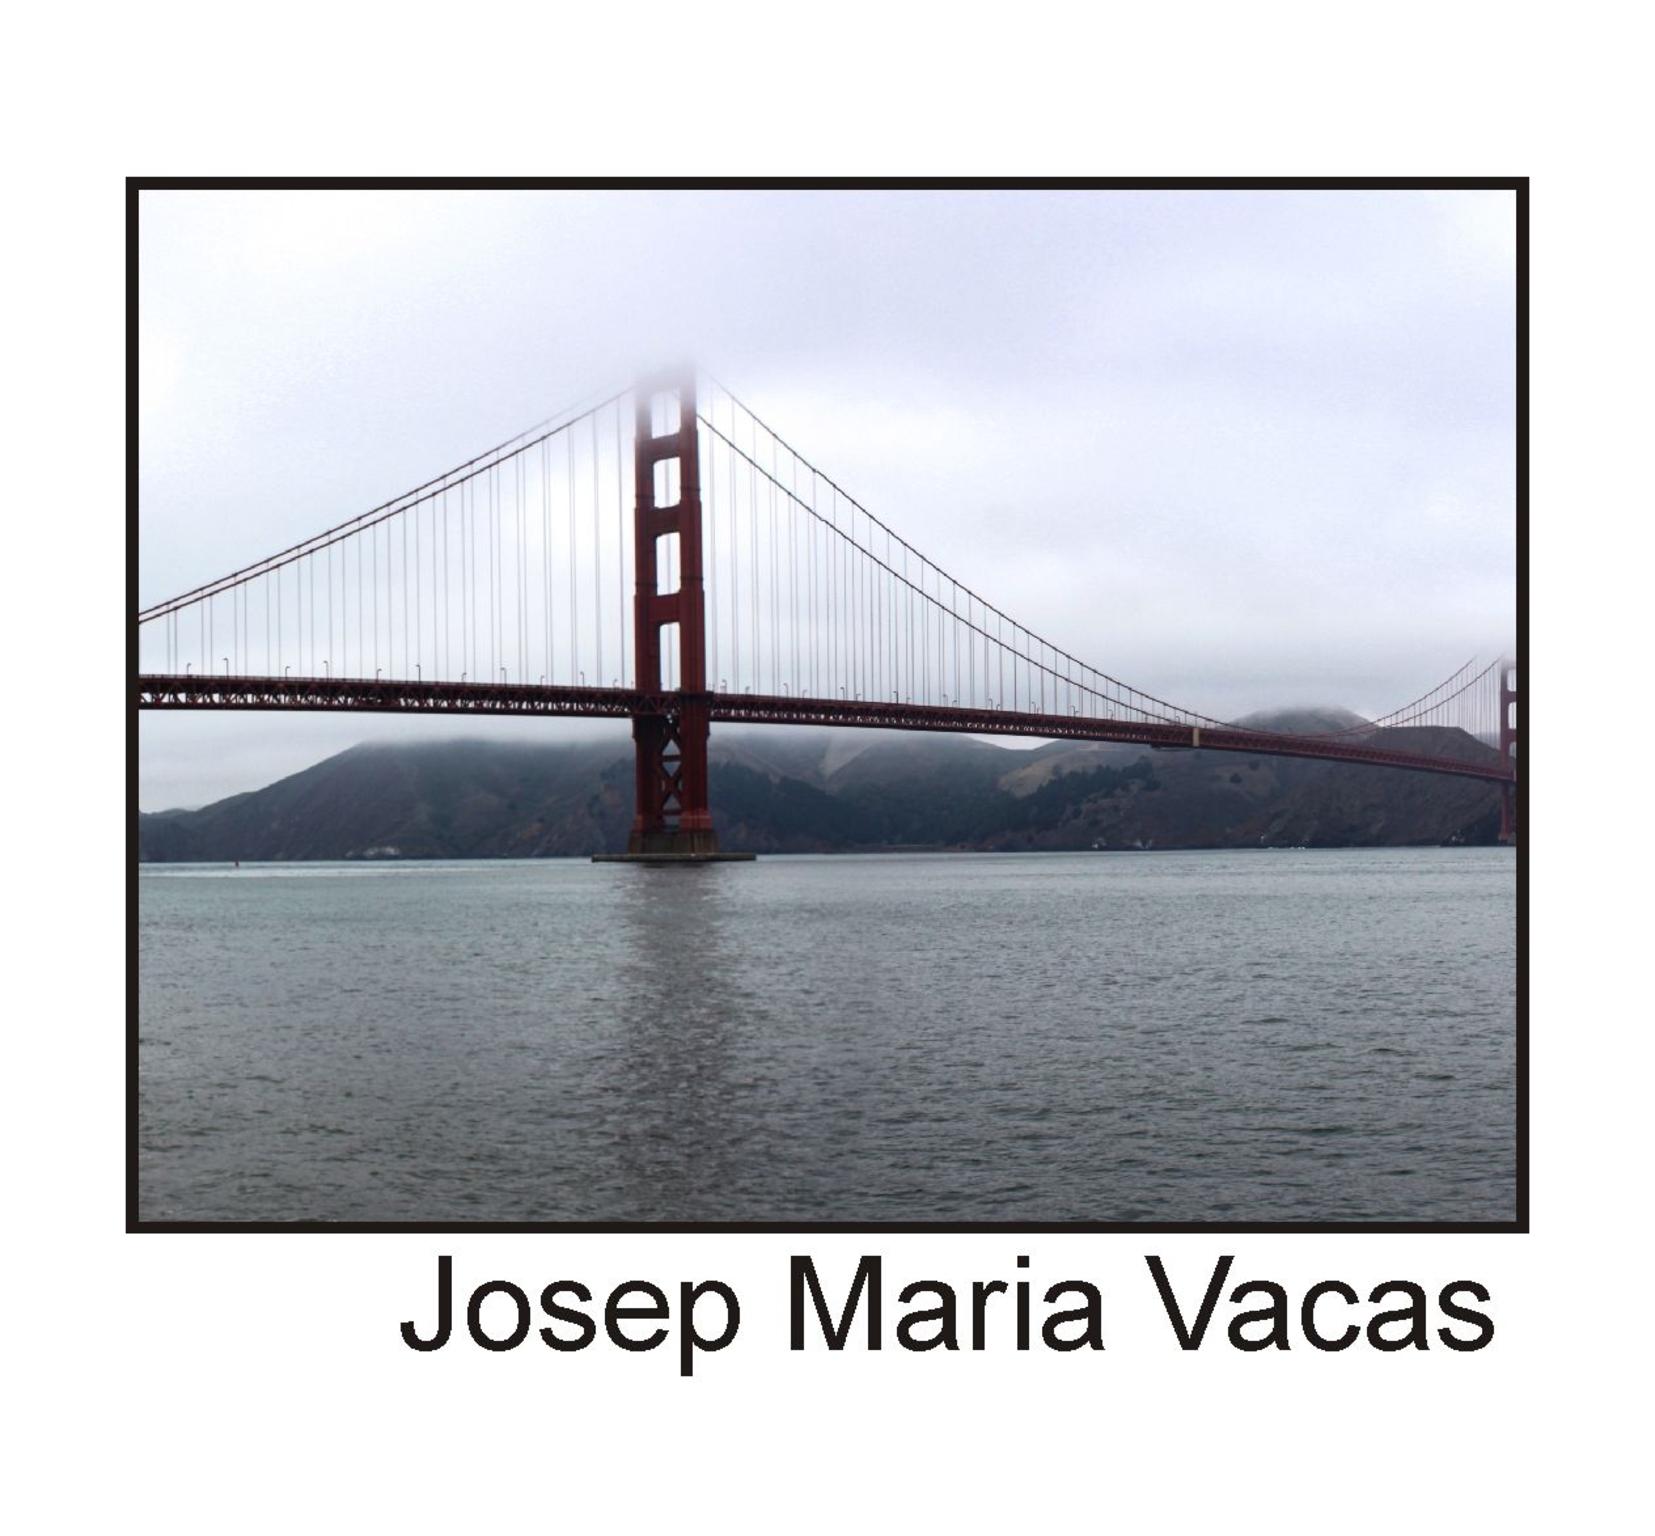  Josep Maria Vacas